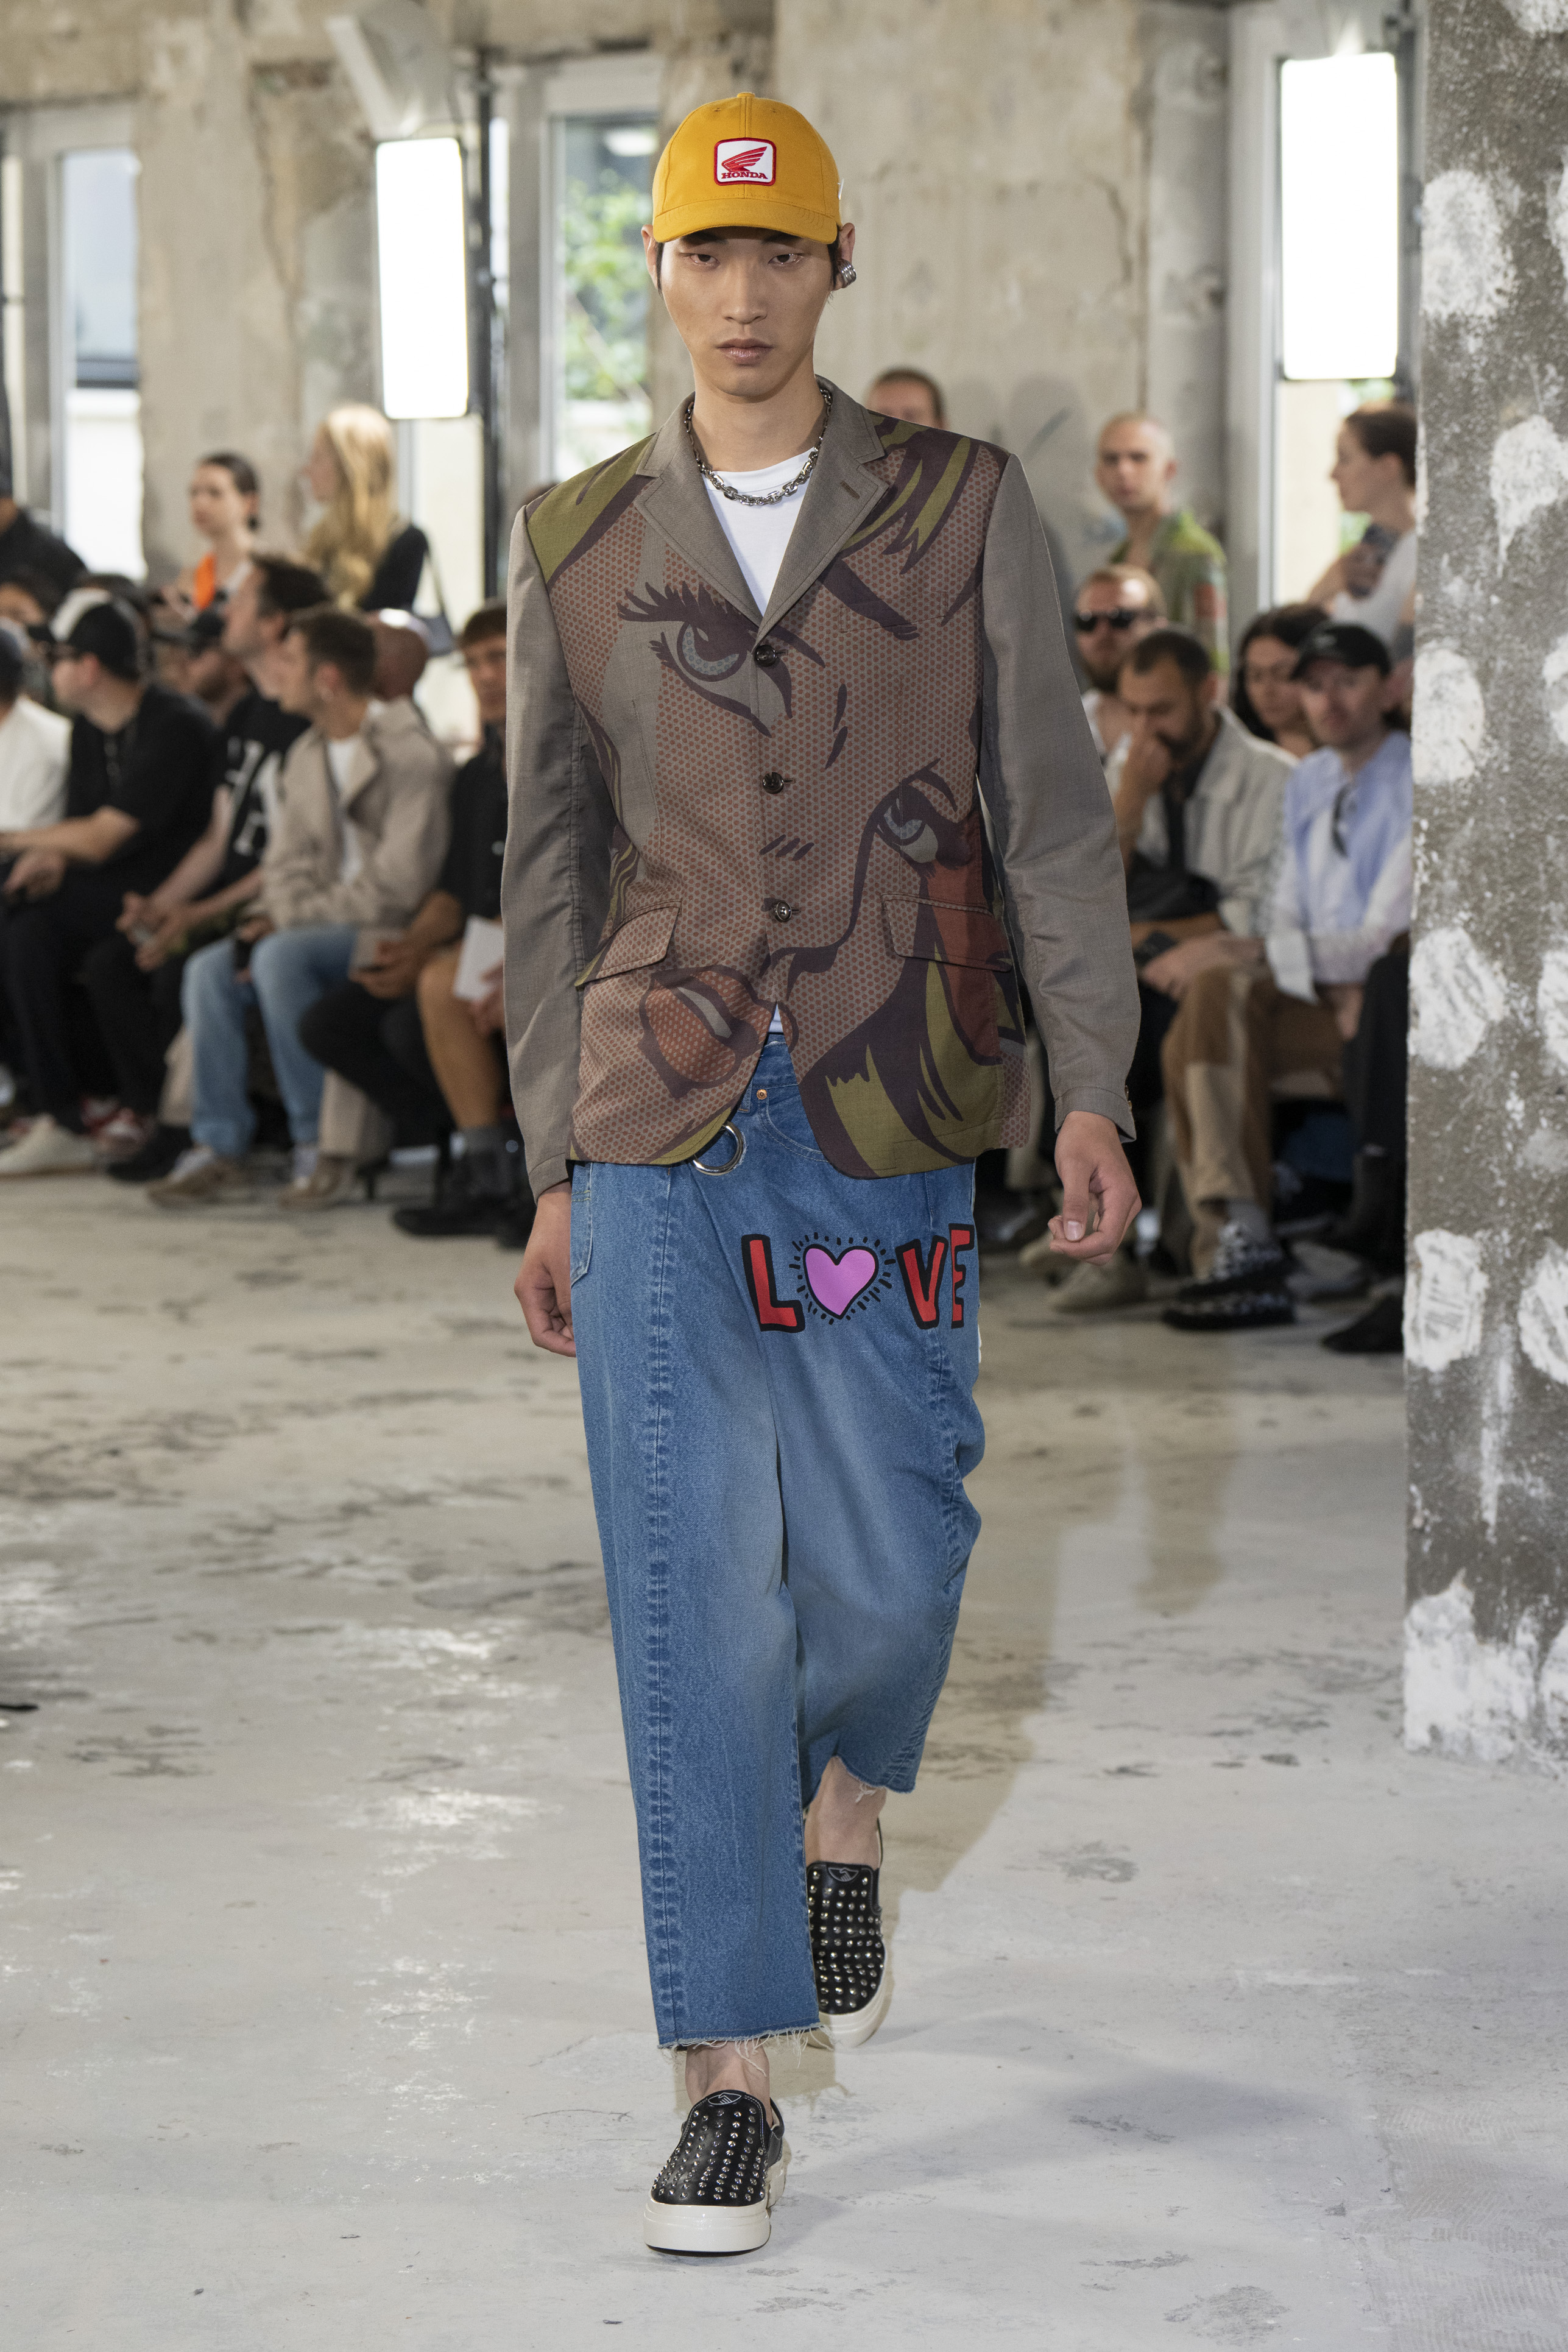 Paris fashion week has shown us the next menswear trend: pyjamas